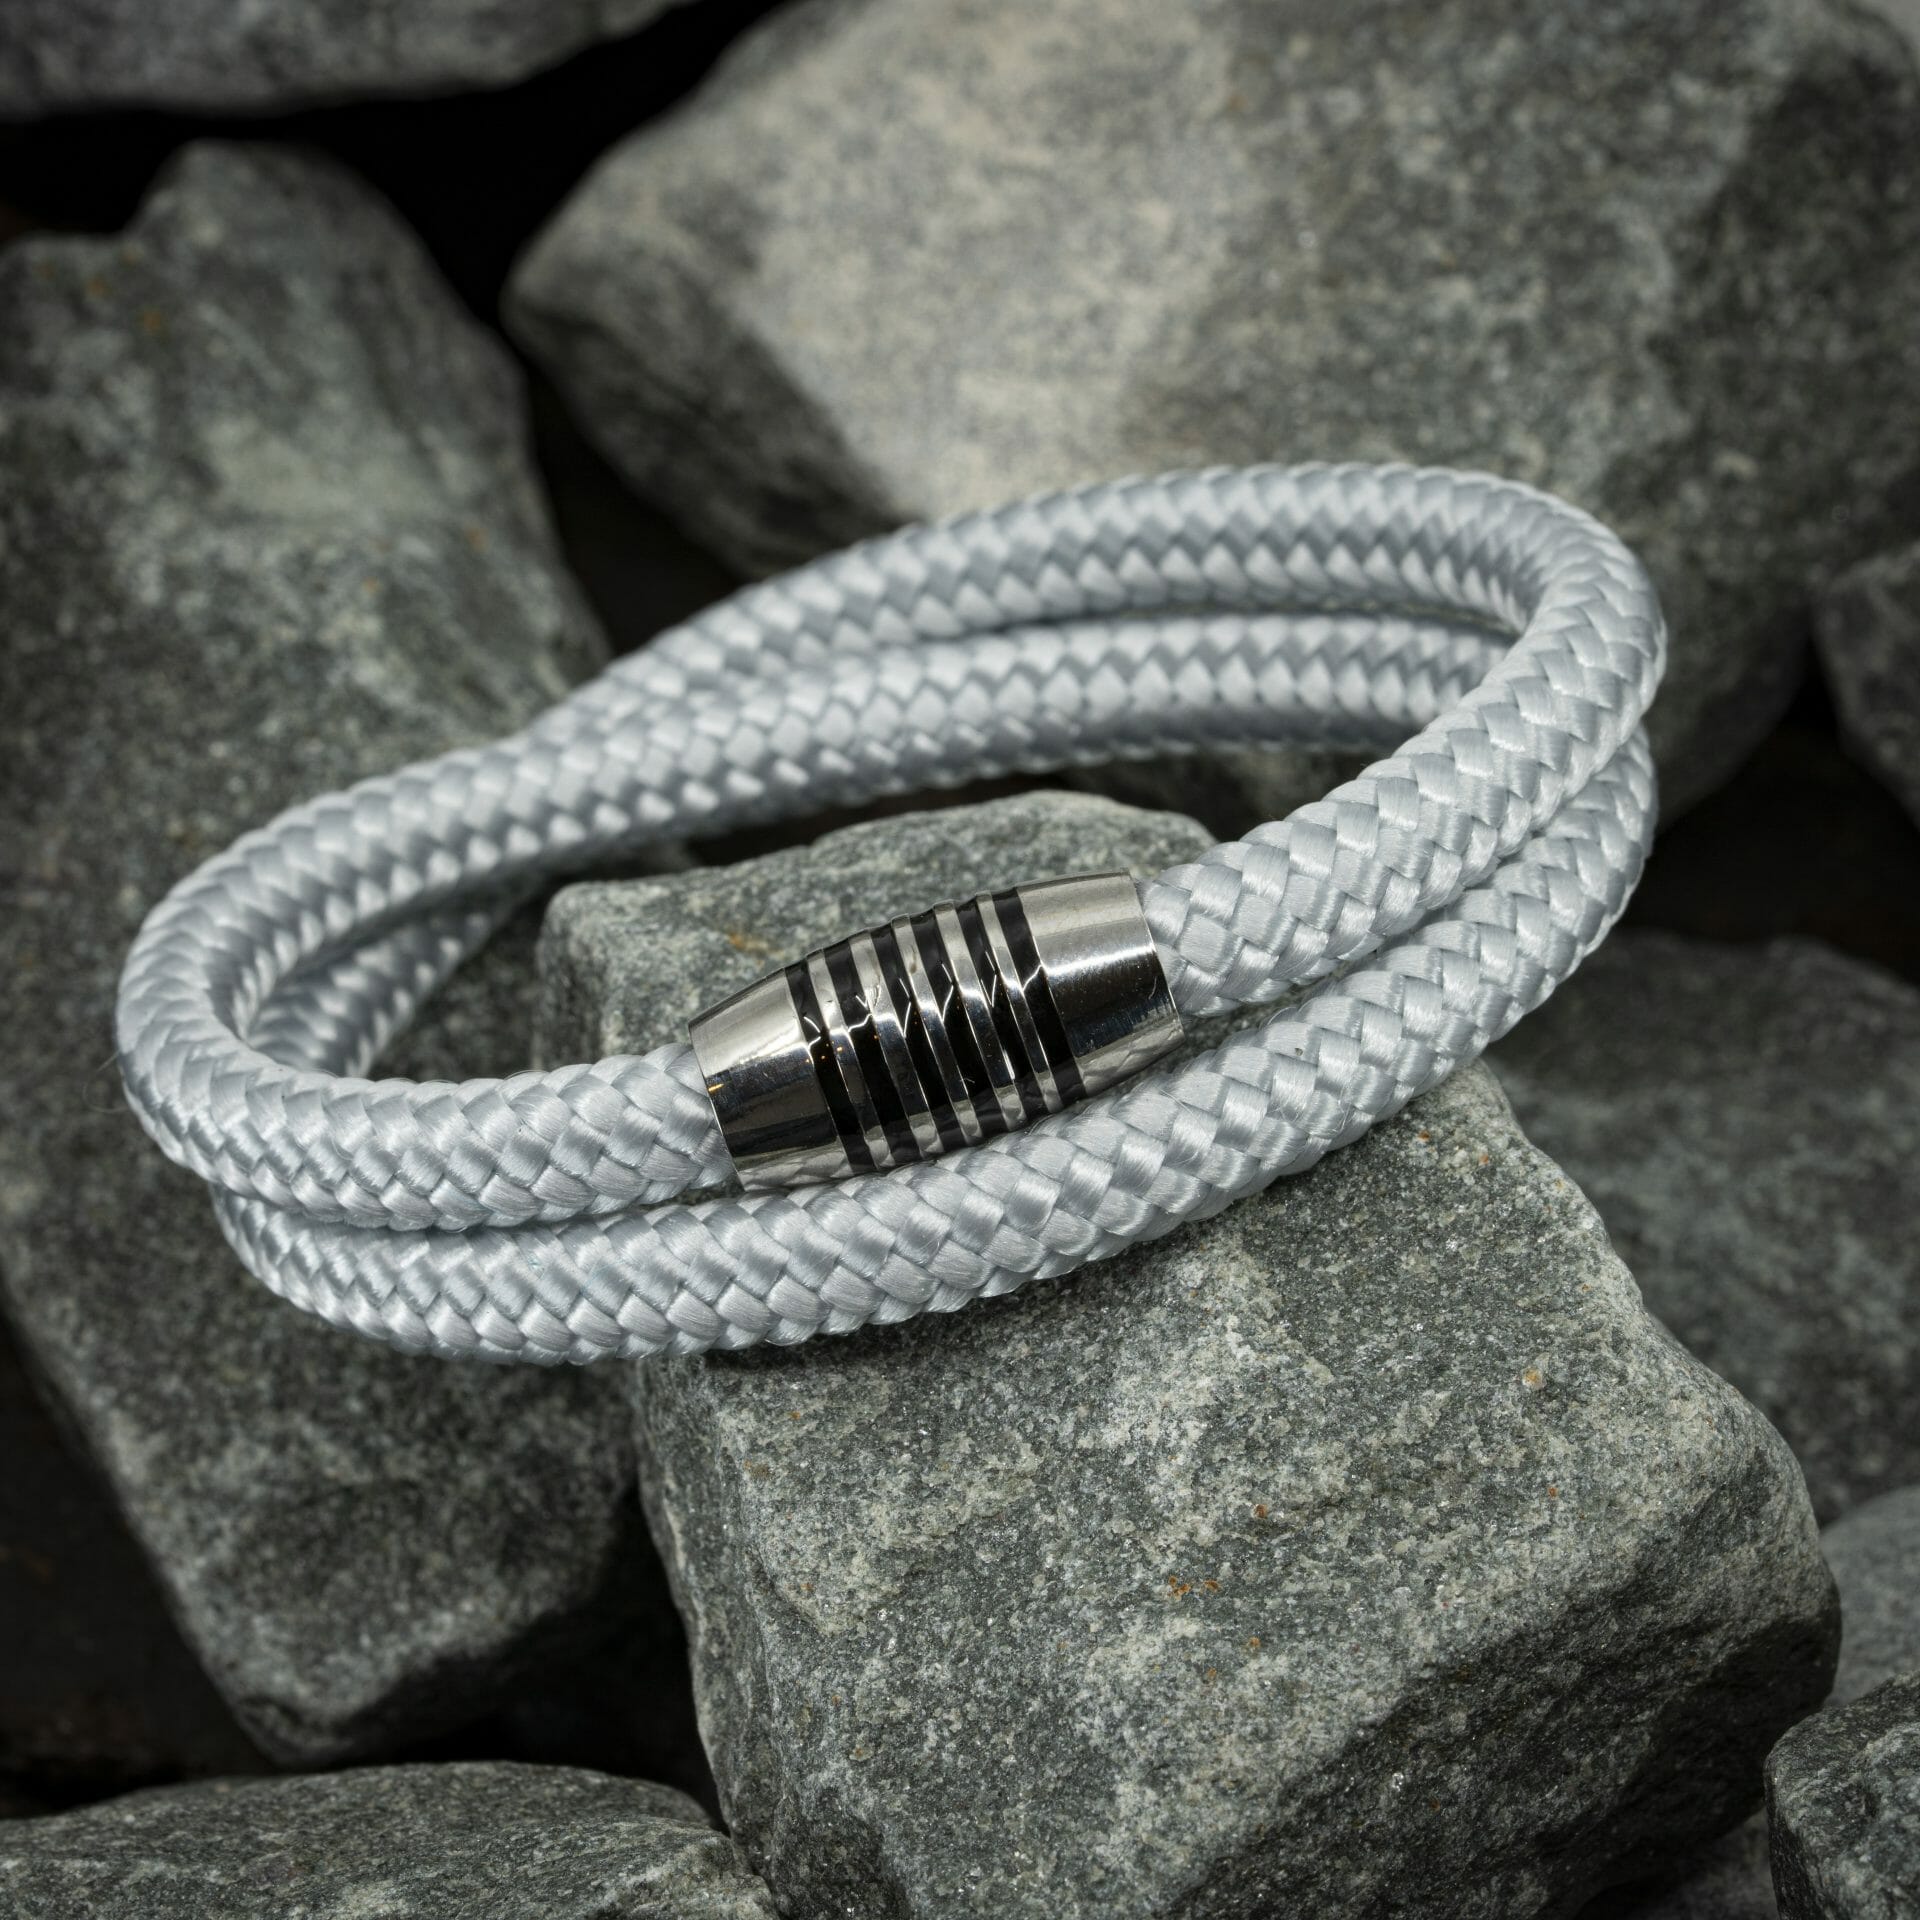 The Buddha rope bracelet - White cord